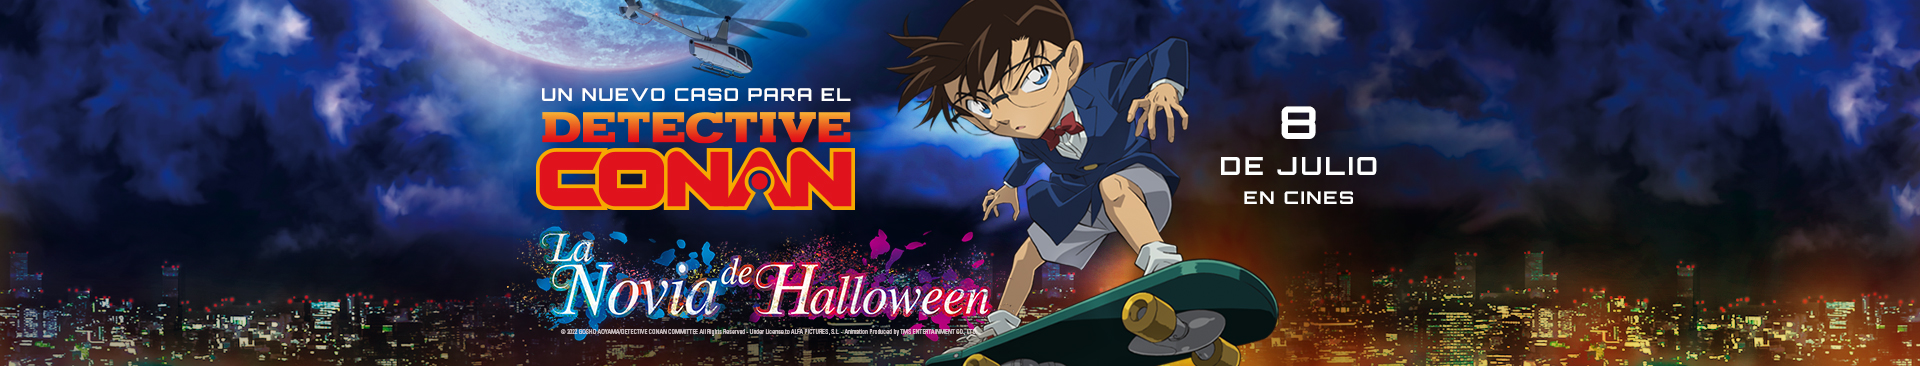 Detective Conan: La novia de Halloween